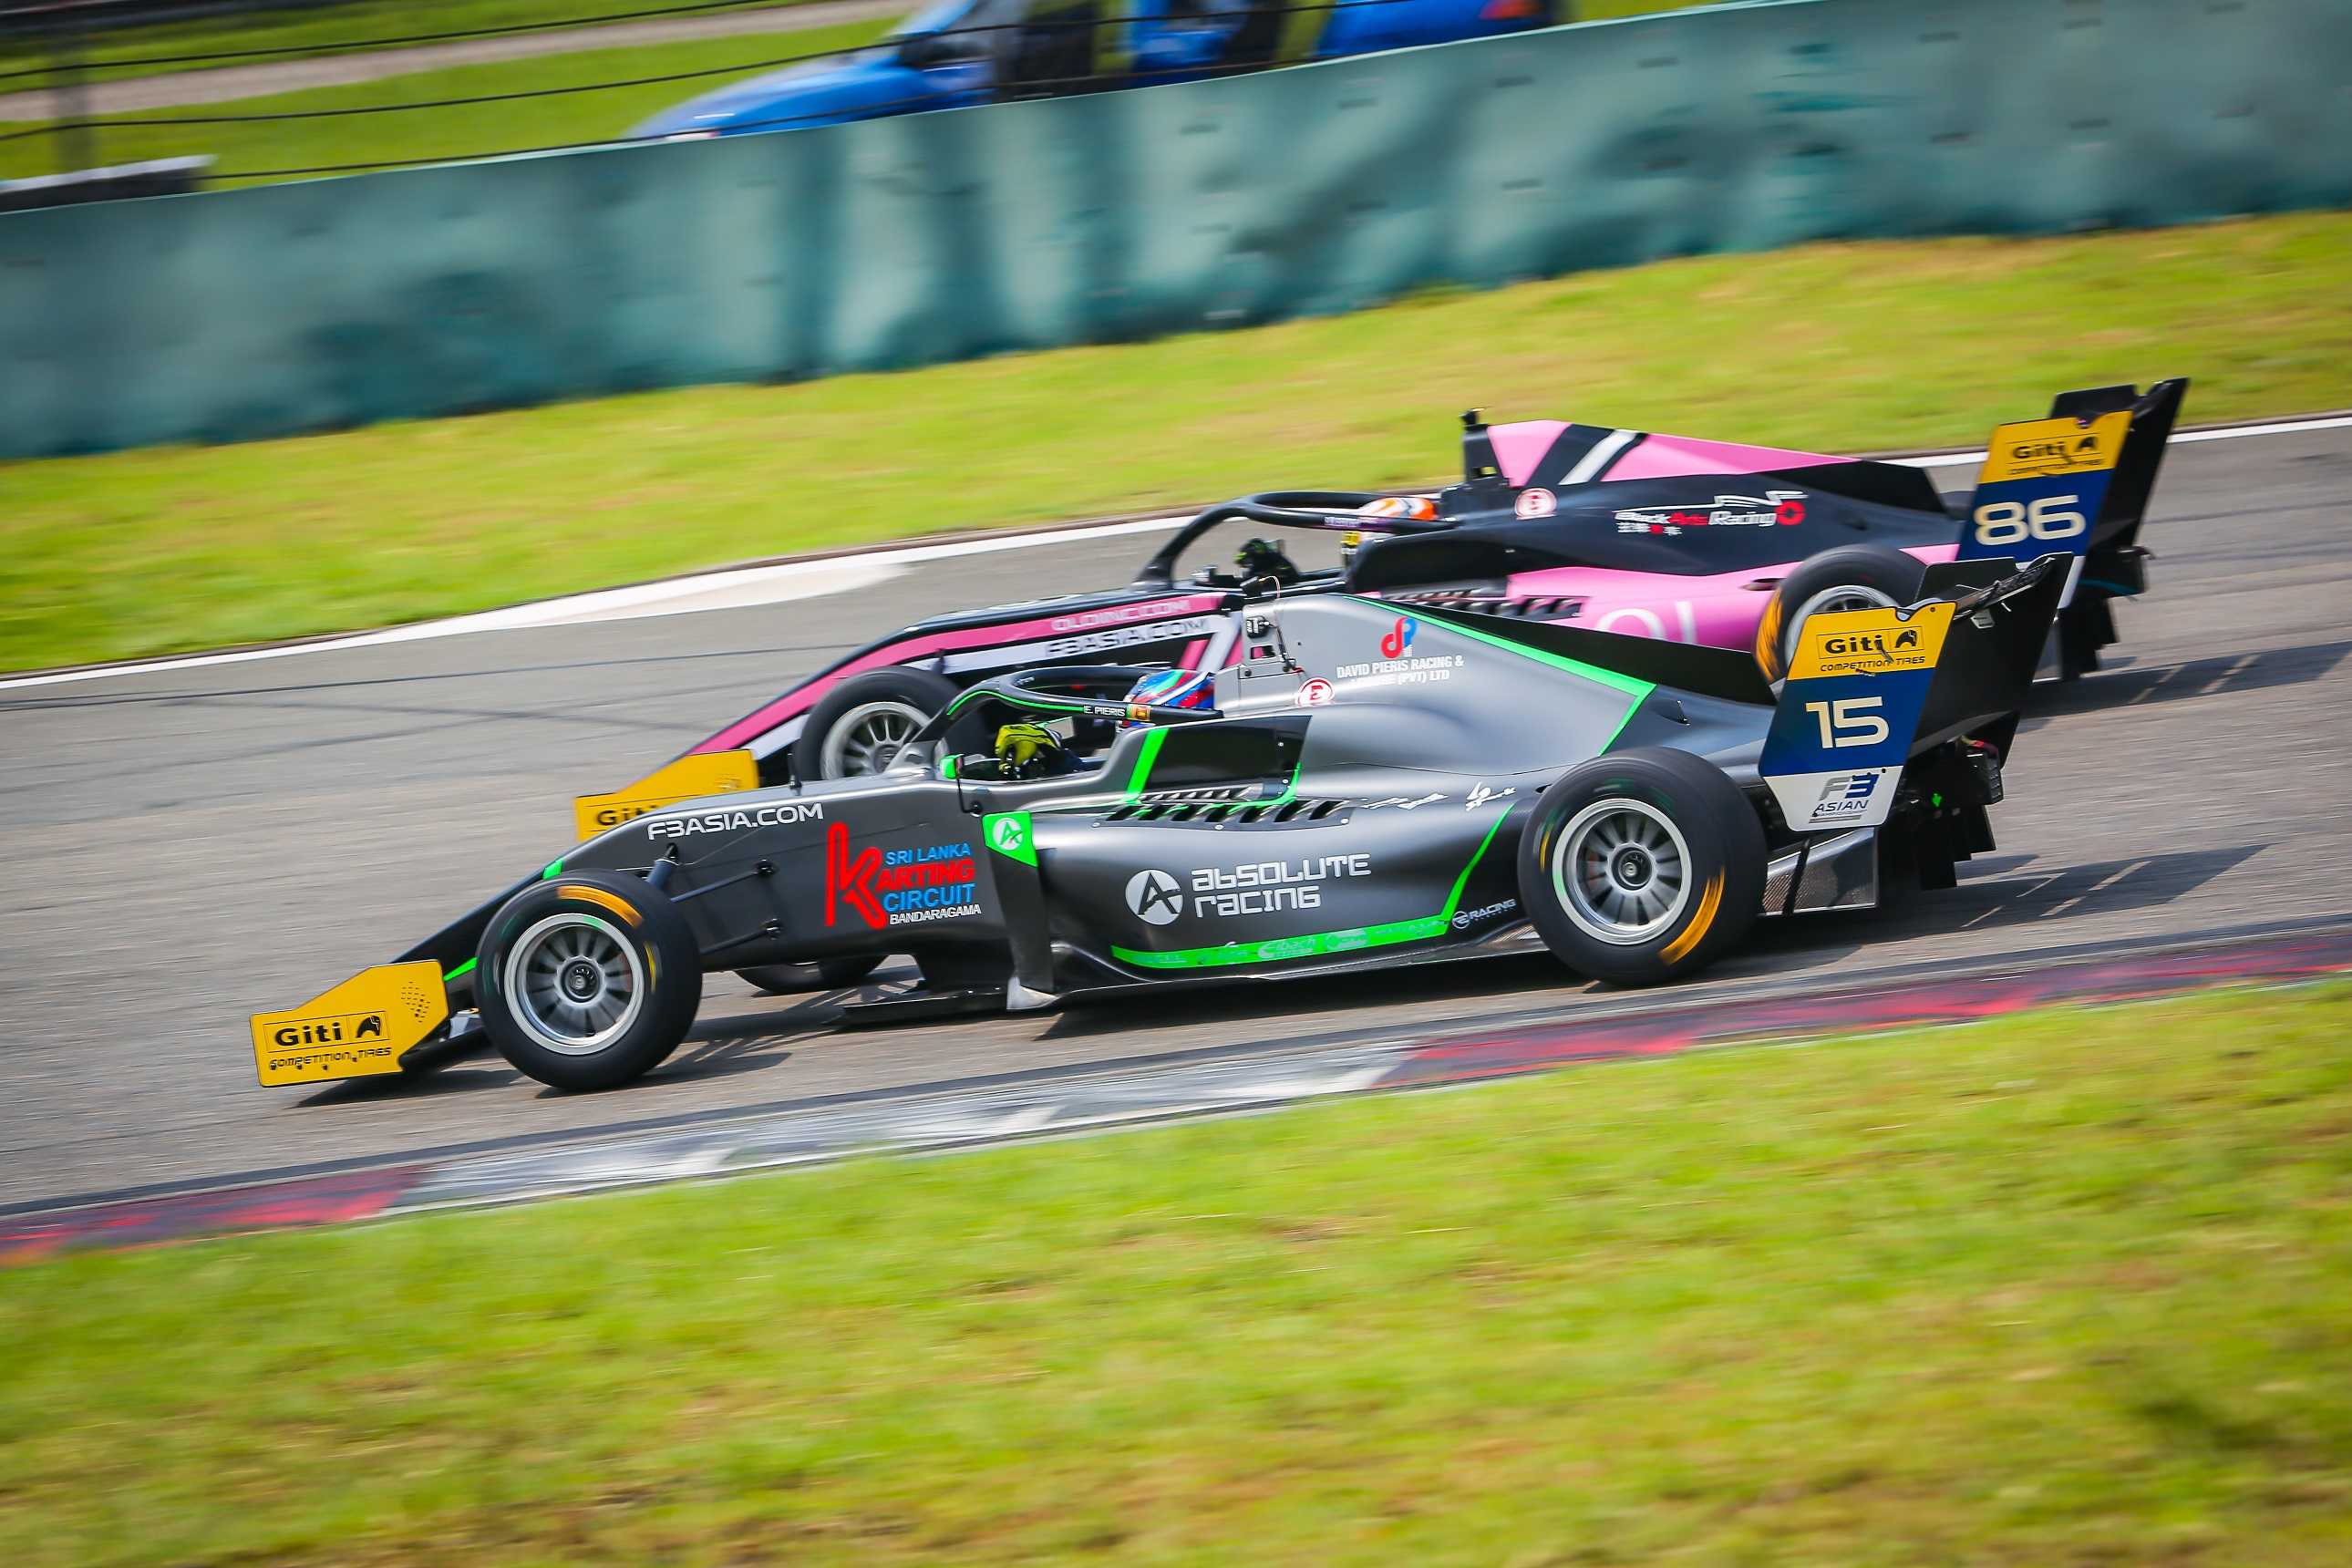  The 2019 Formula 3 Asian Championship